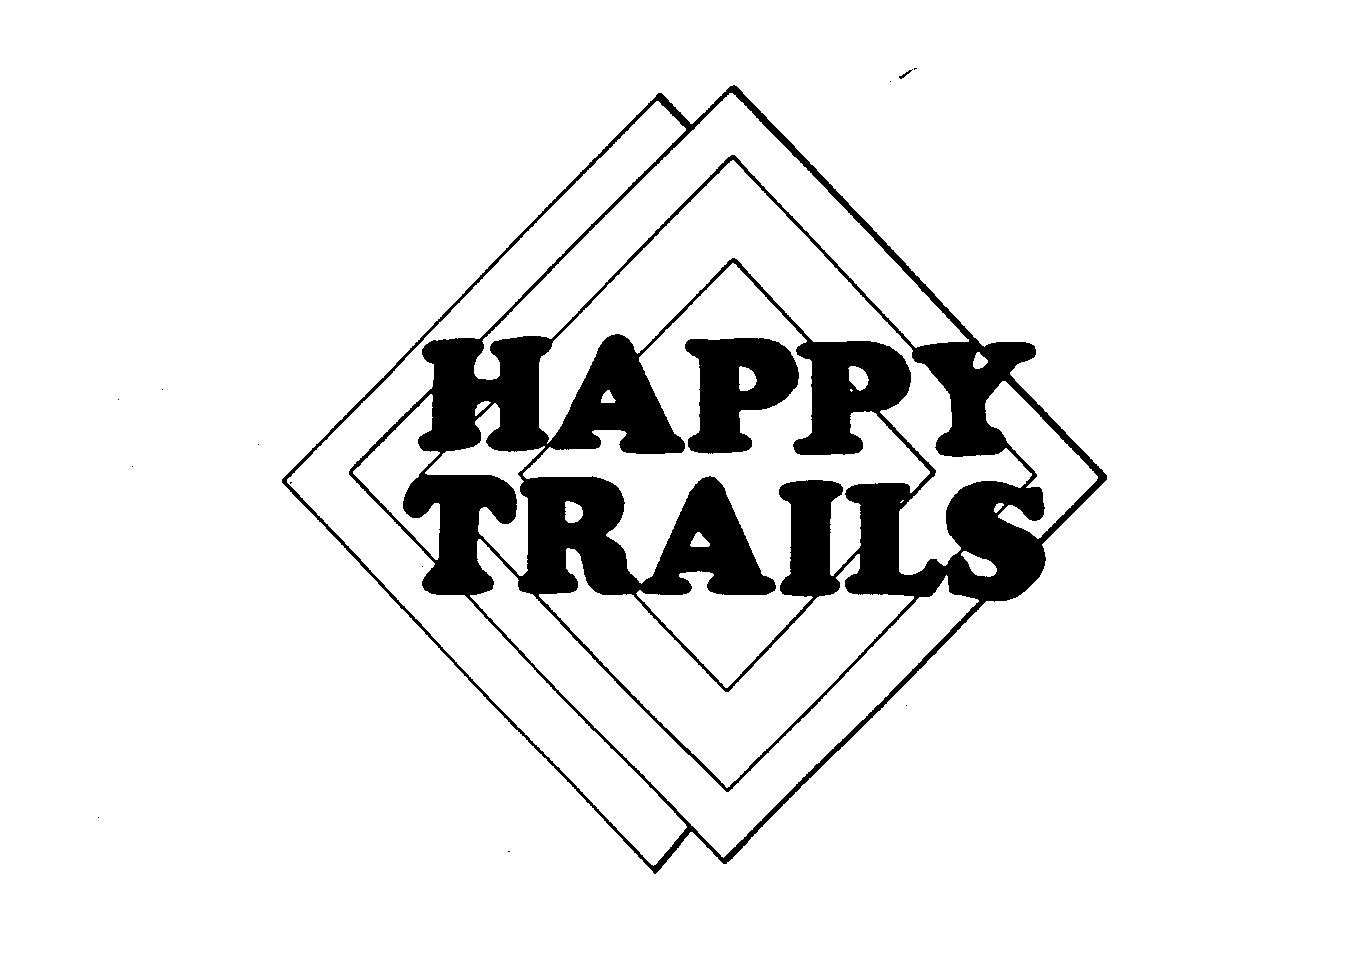 Trademark Logo HAPPY TRAILS